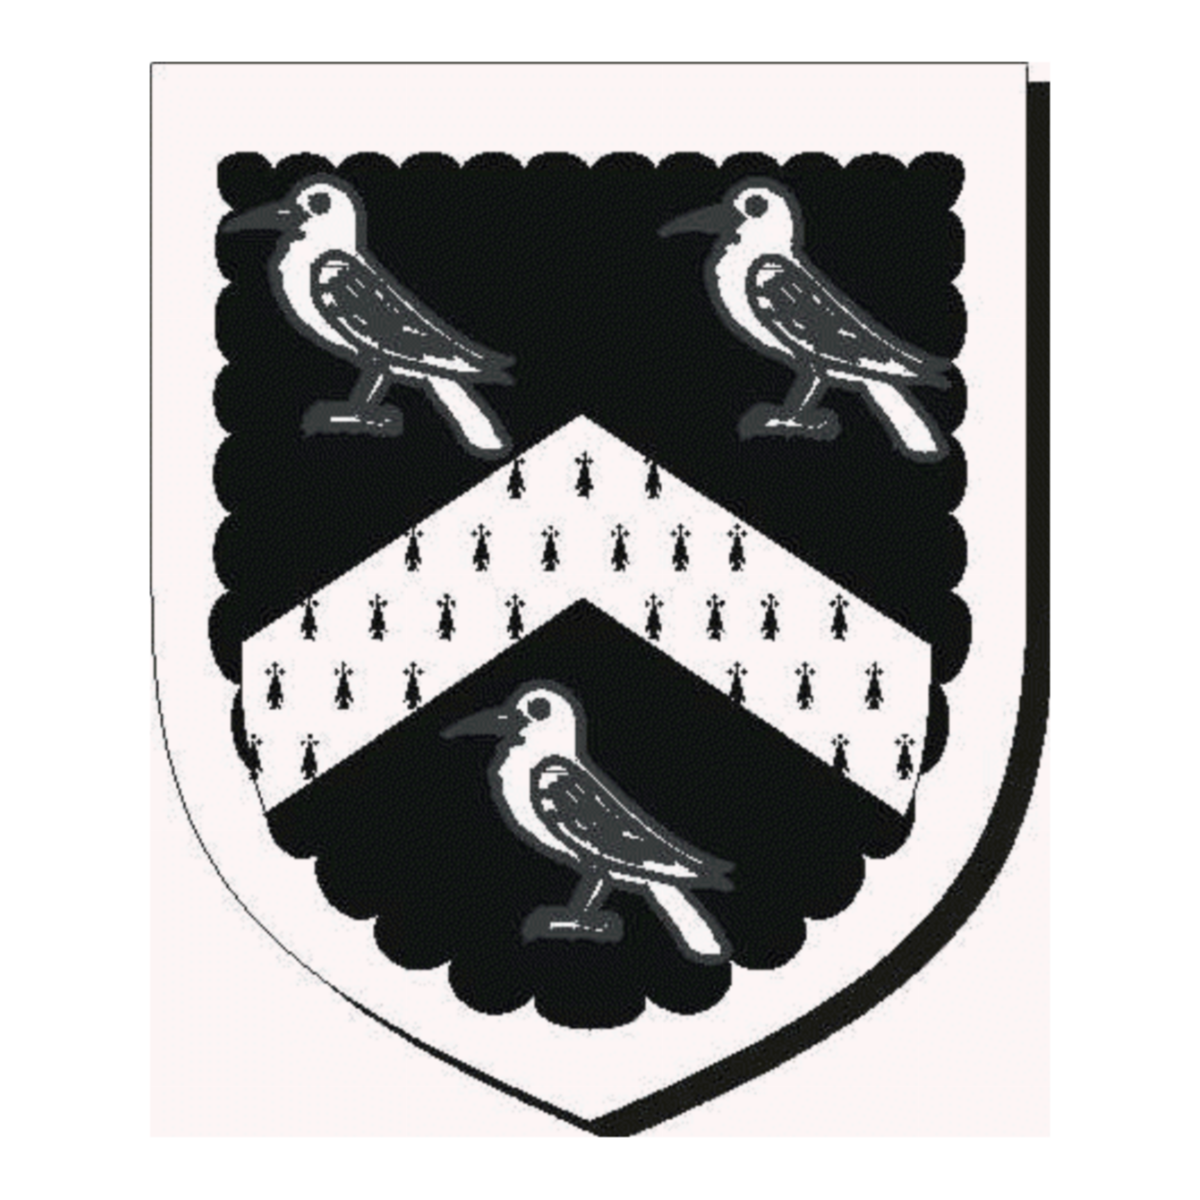 Coat of arms of familyStanley